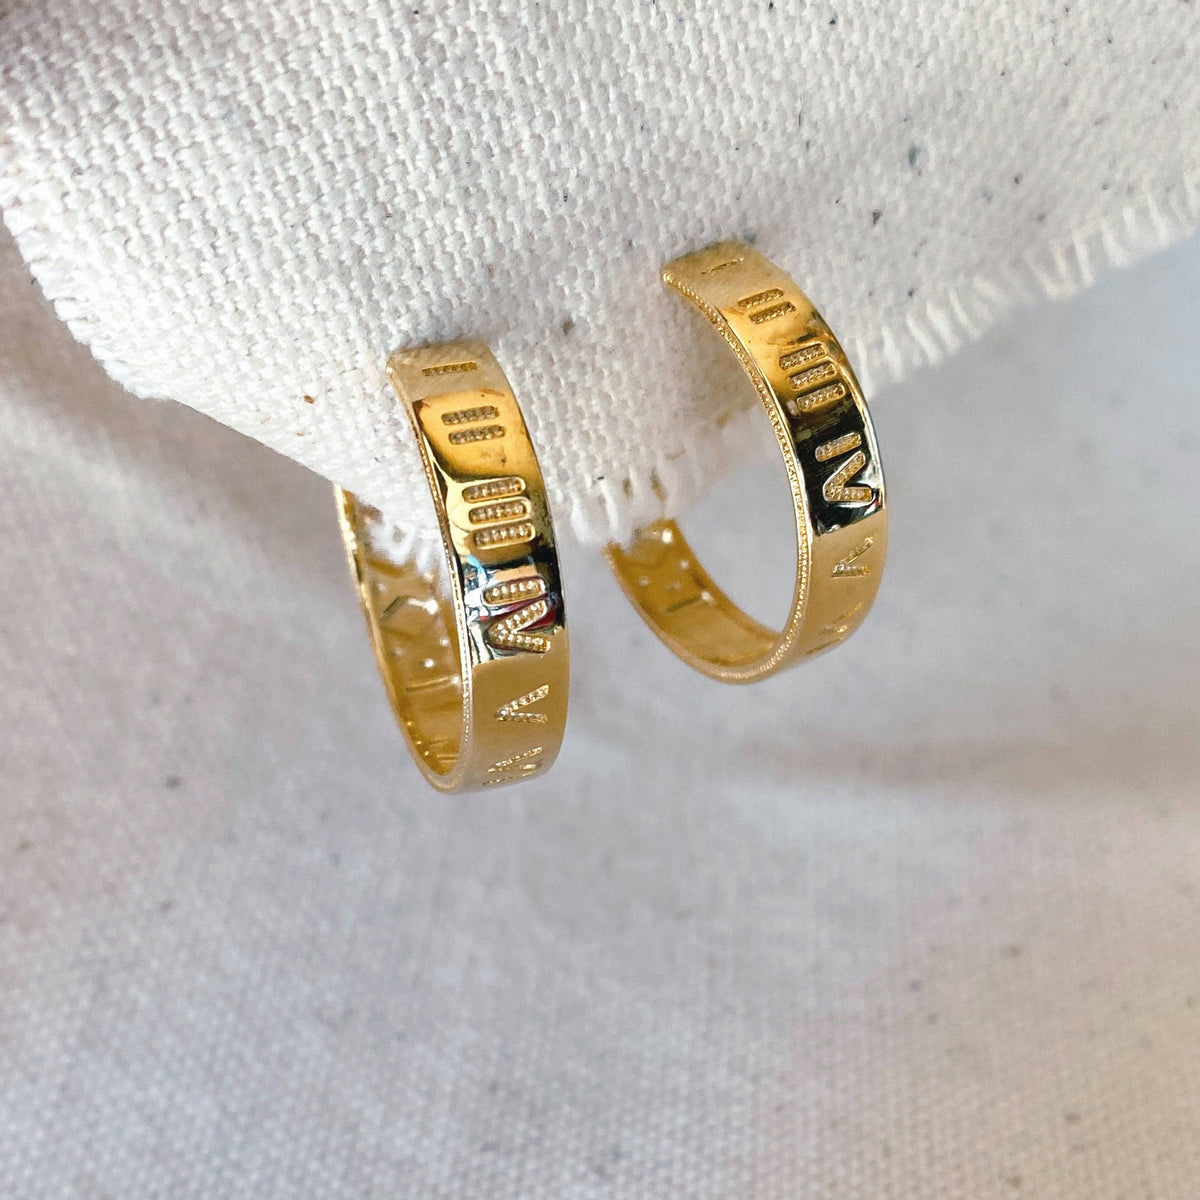 18k Gold Filled Roman Numerals C Hoop Earrings